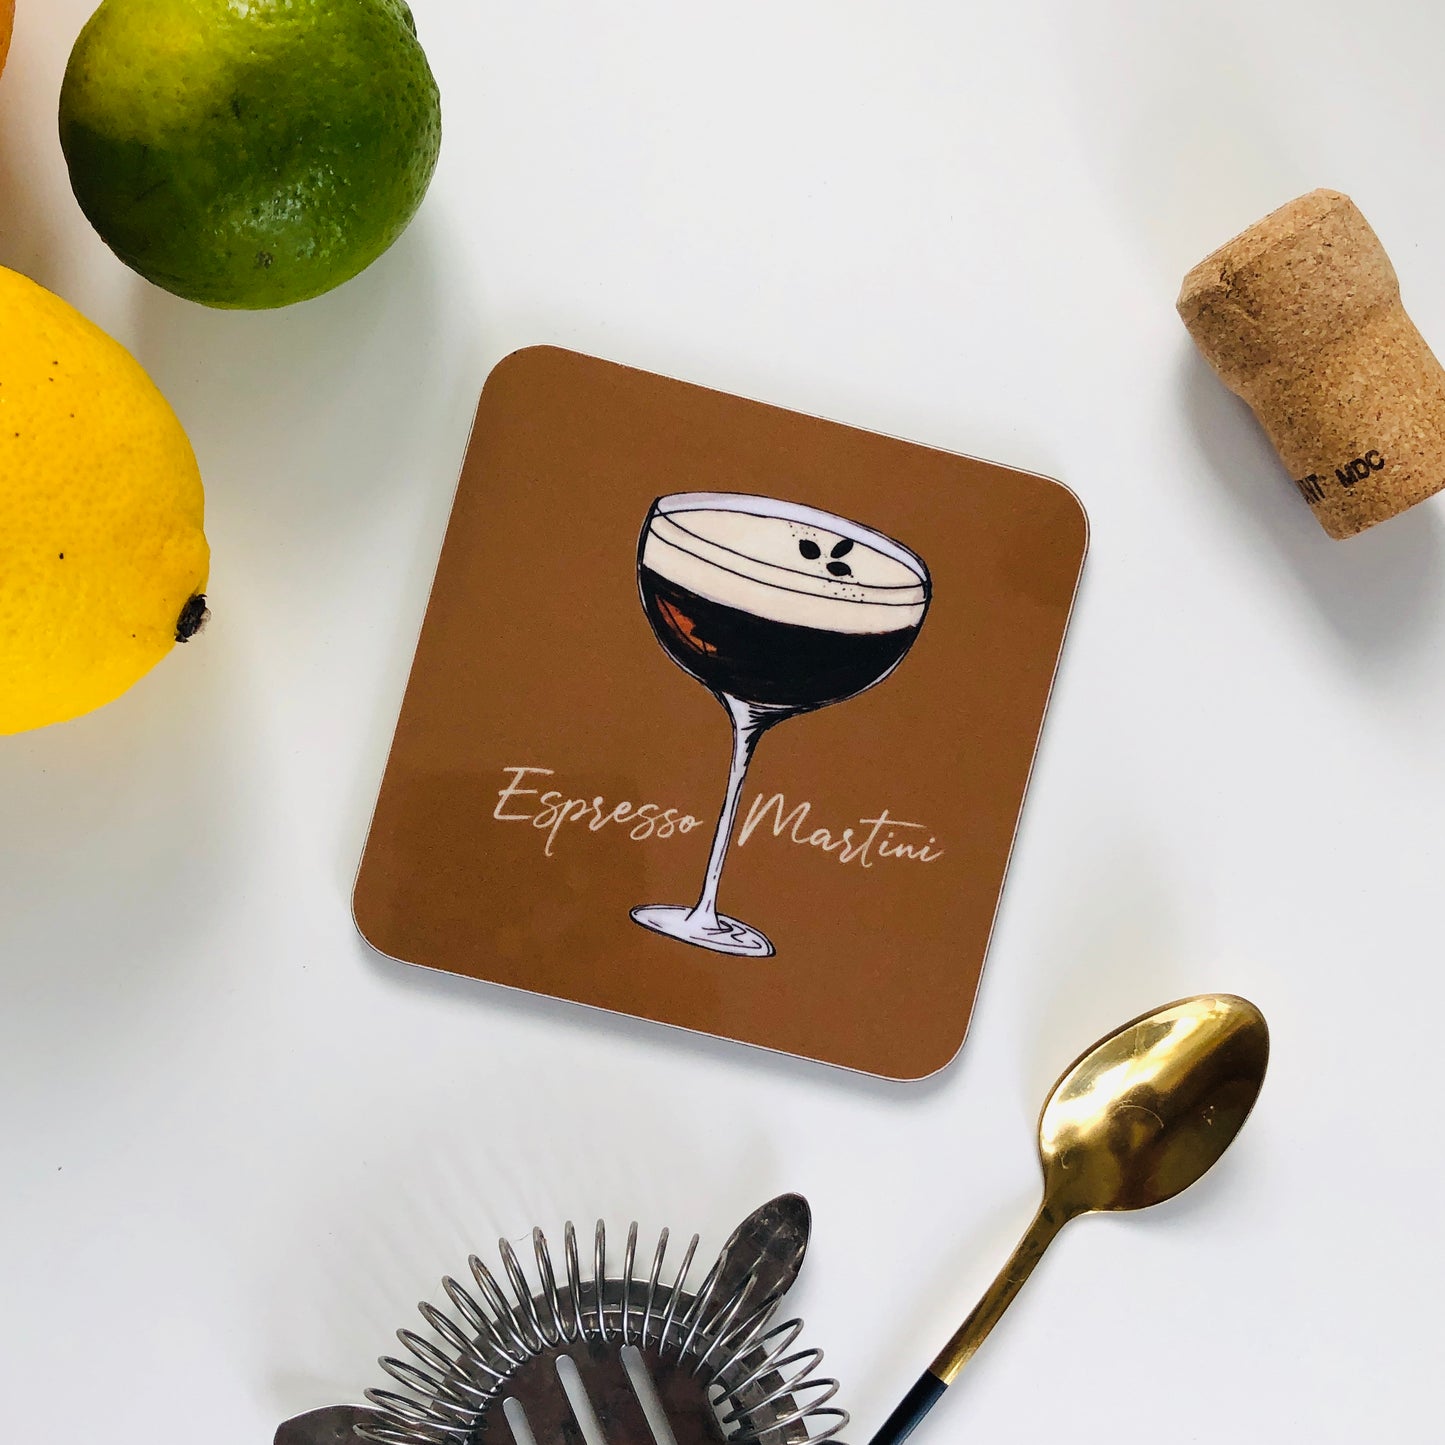 Espresso Martini illustrated drinks coaster